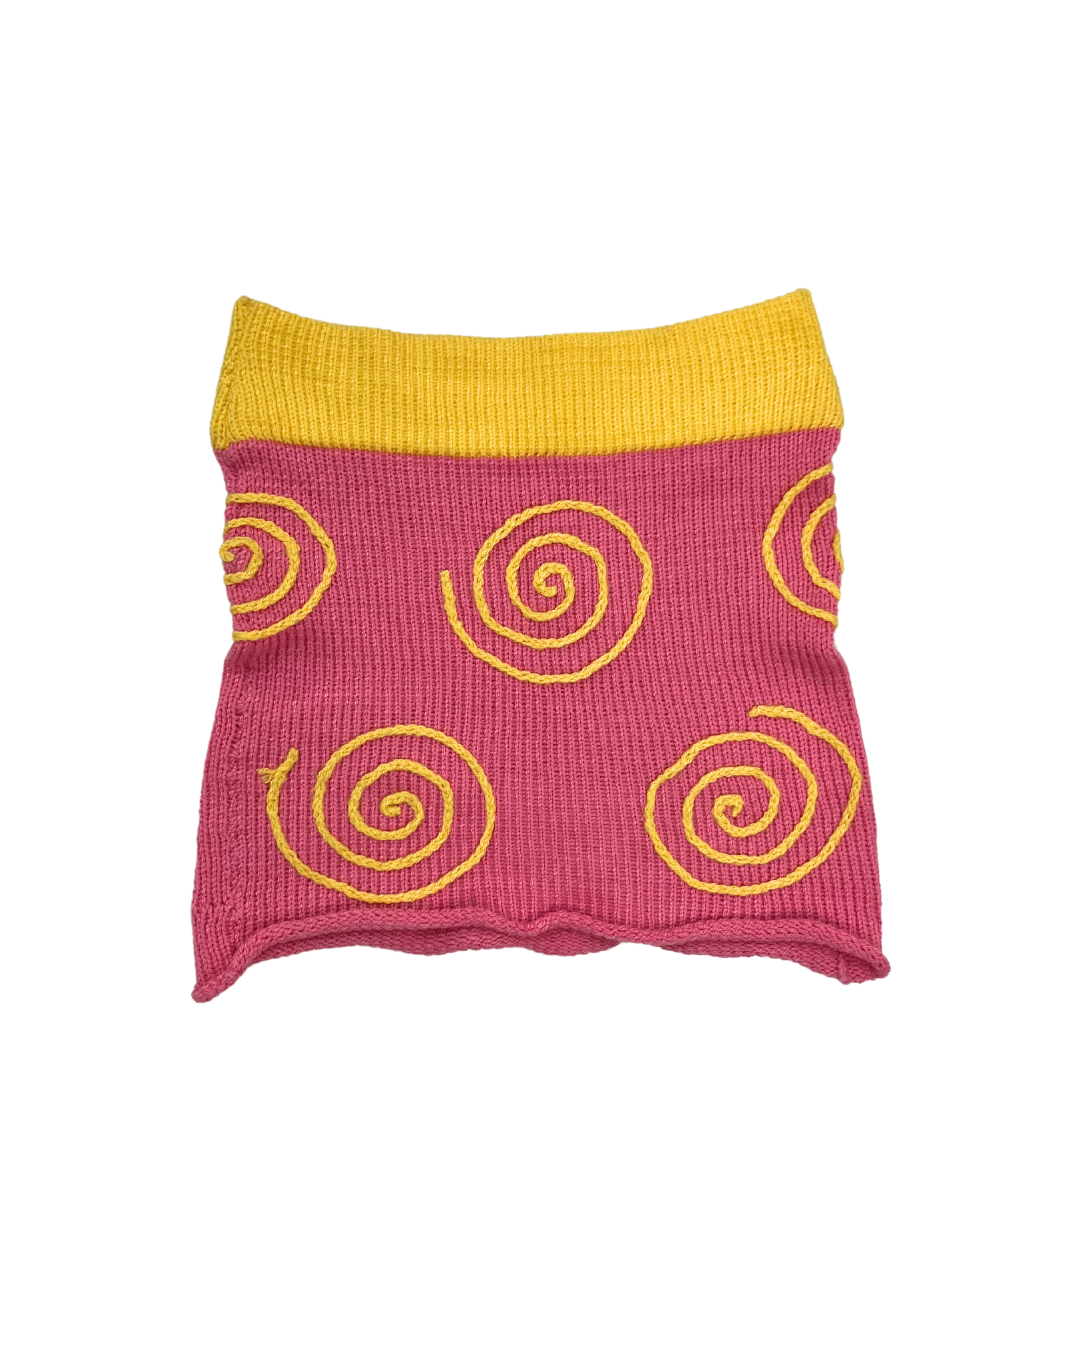 Handmade Knit Pink and Yellow Spiral Skirt